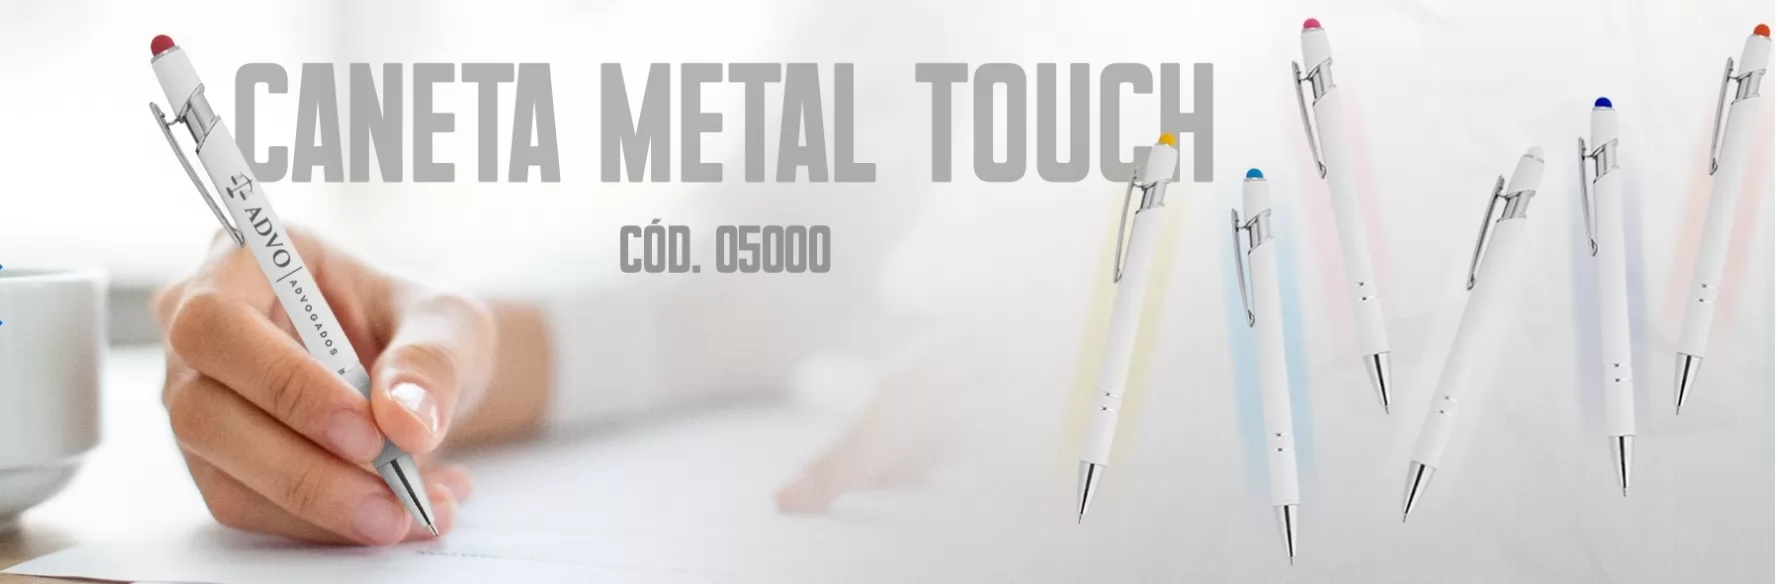 Caneta Metal Touch